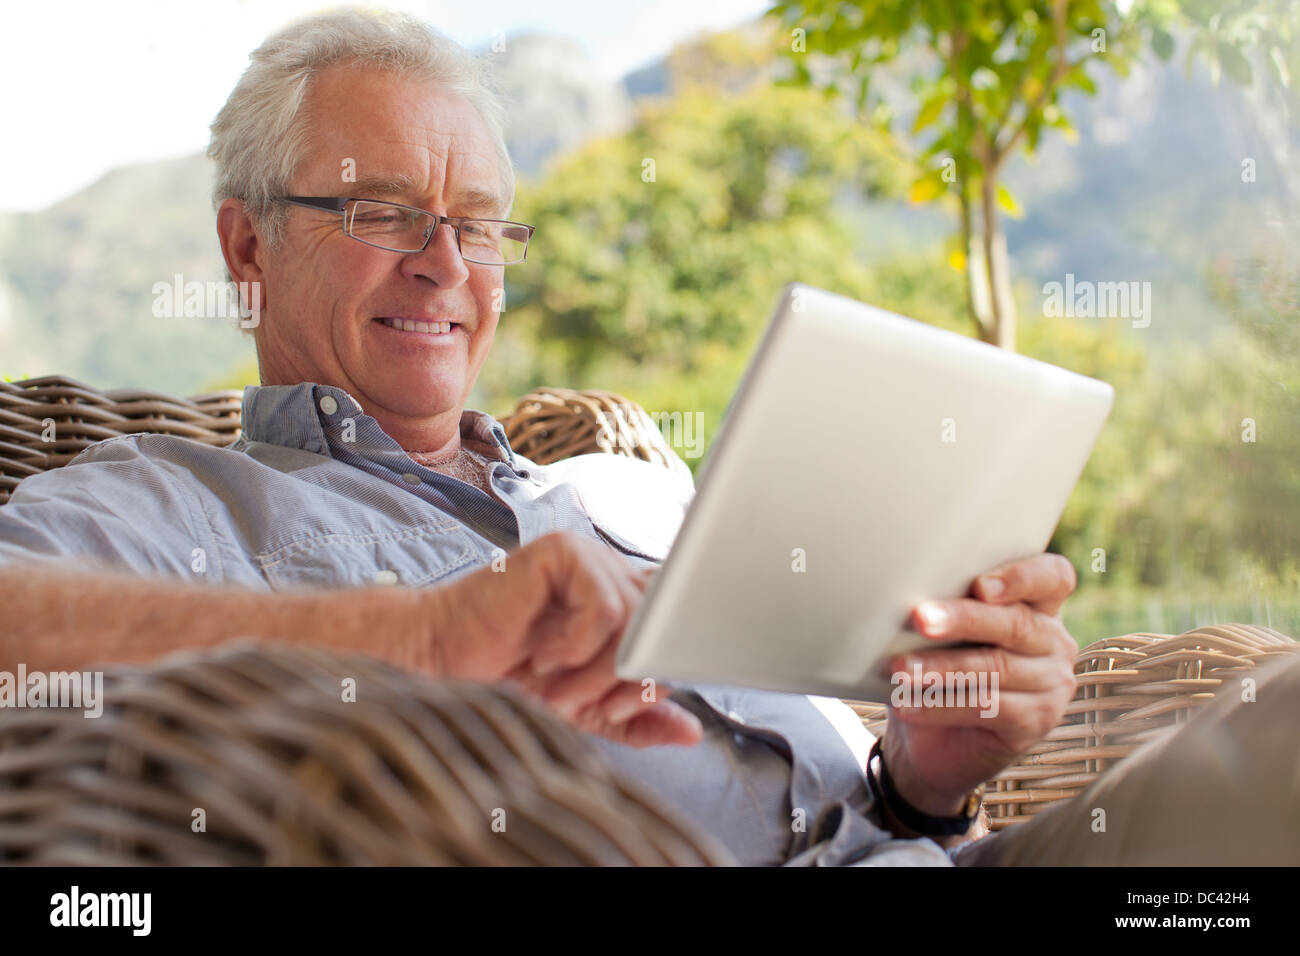 Smiling senior man using digital tablet on patio Banque D'Images